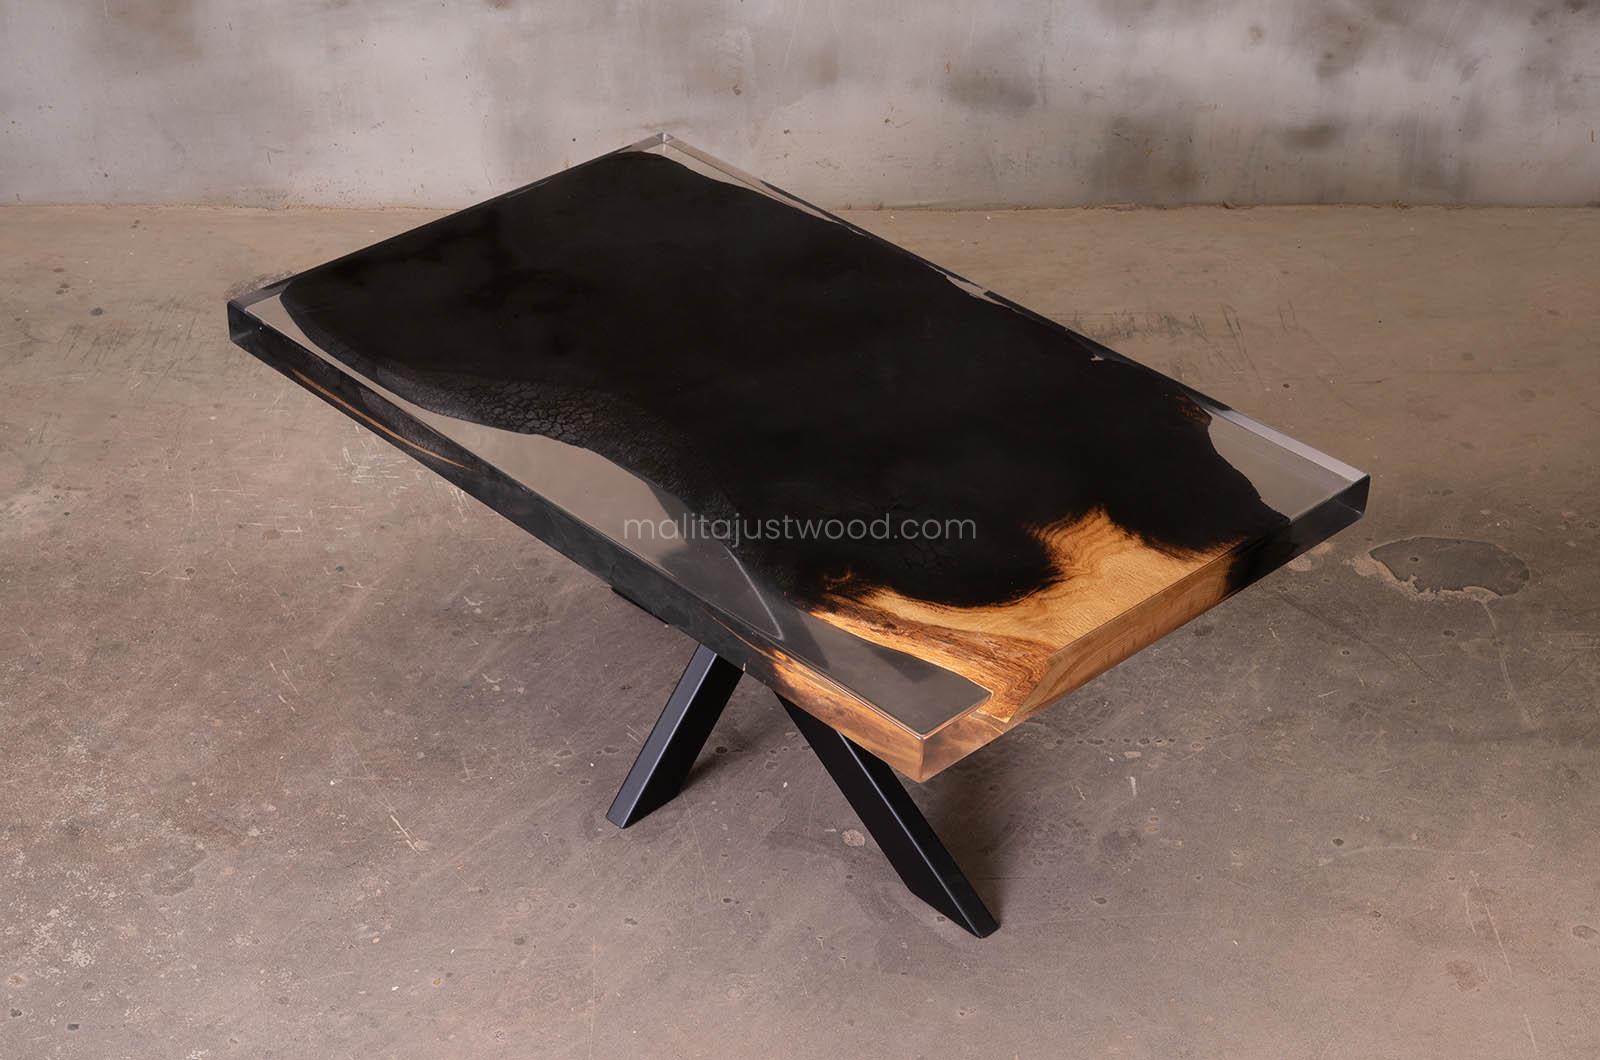 epoxy resin burn wood coffee table